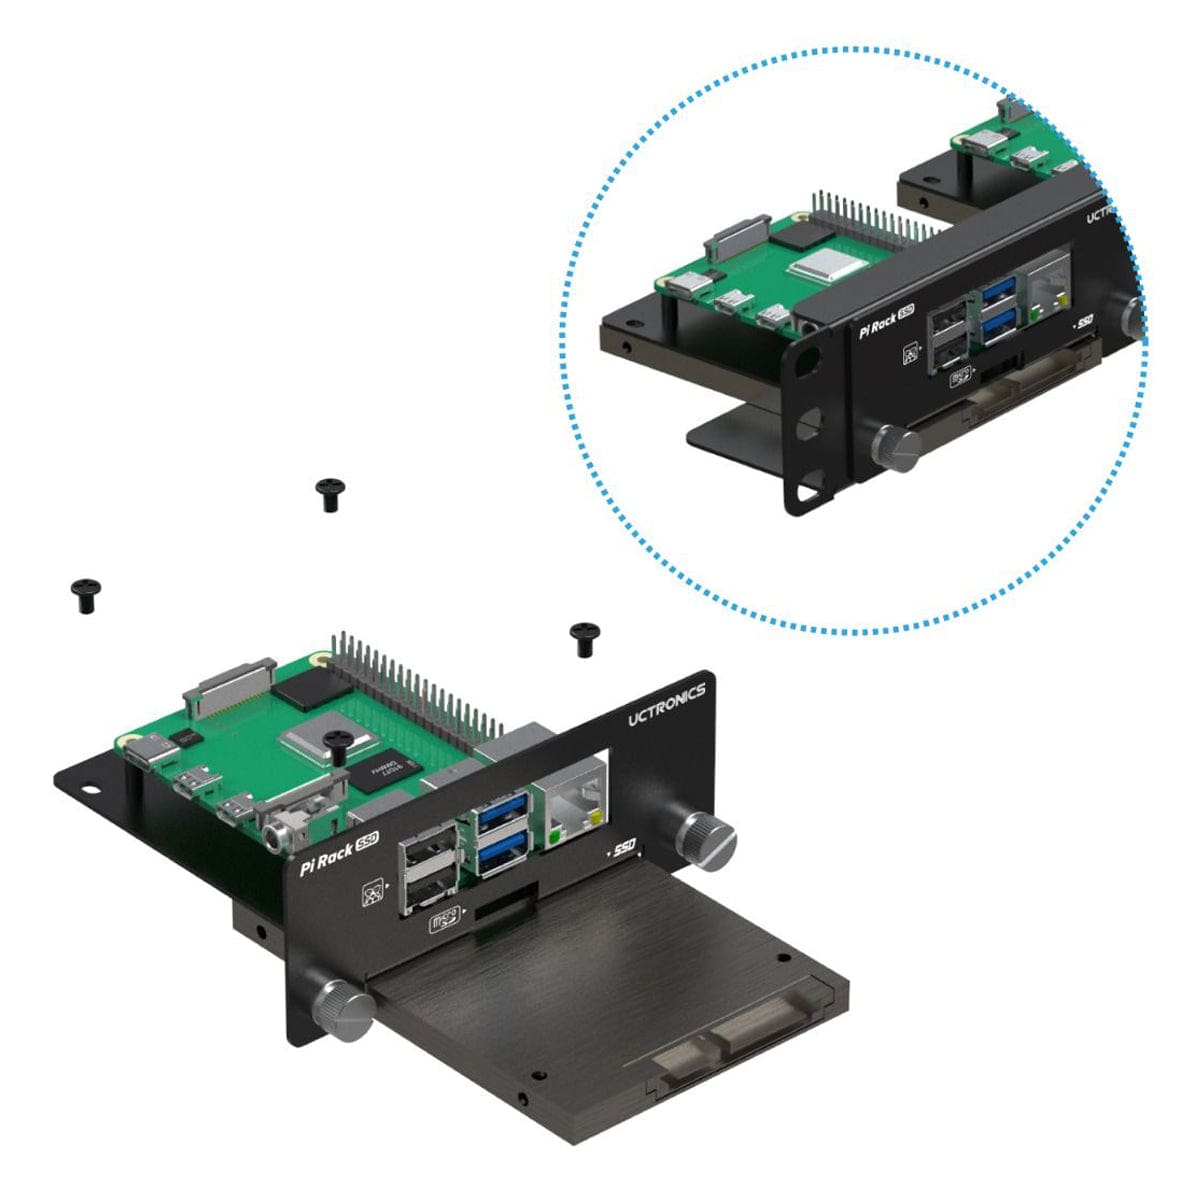 Uctronics 19" 1U Raspberry Pi Rack Mount with SSD Mounting Brackets (Holds 4x RPi) - The Pi Hut